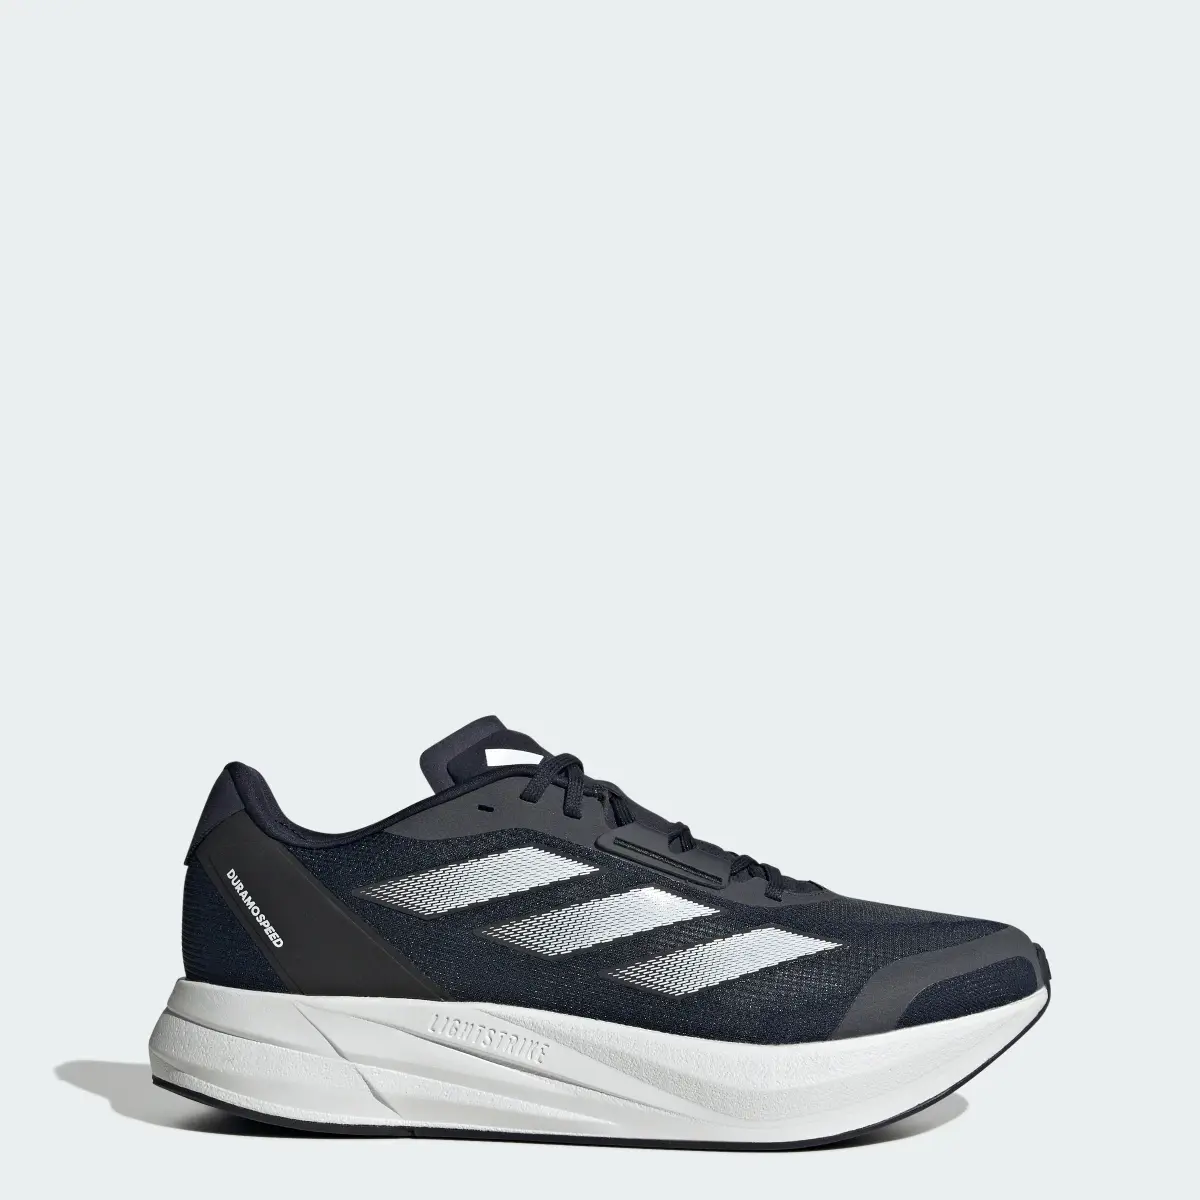 Adidas Duramo Speed Shoes. 1